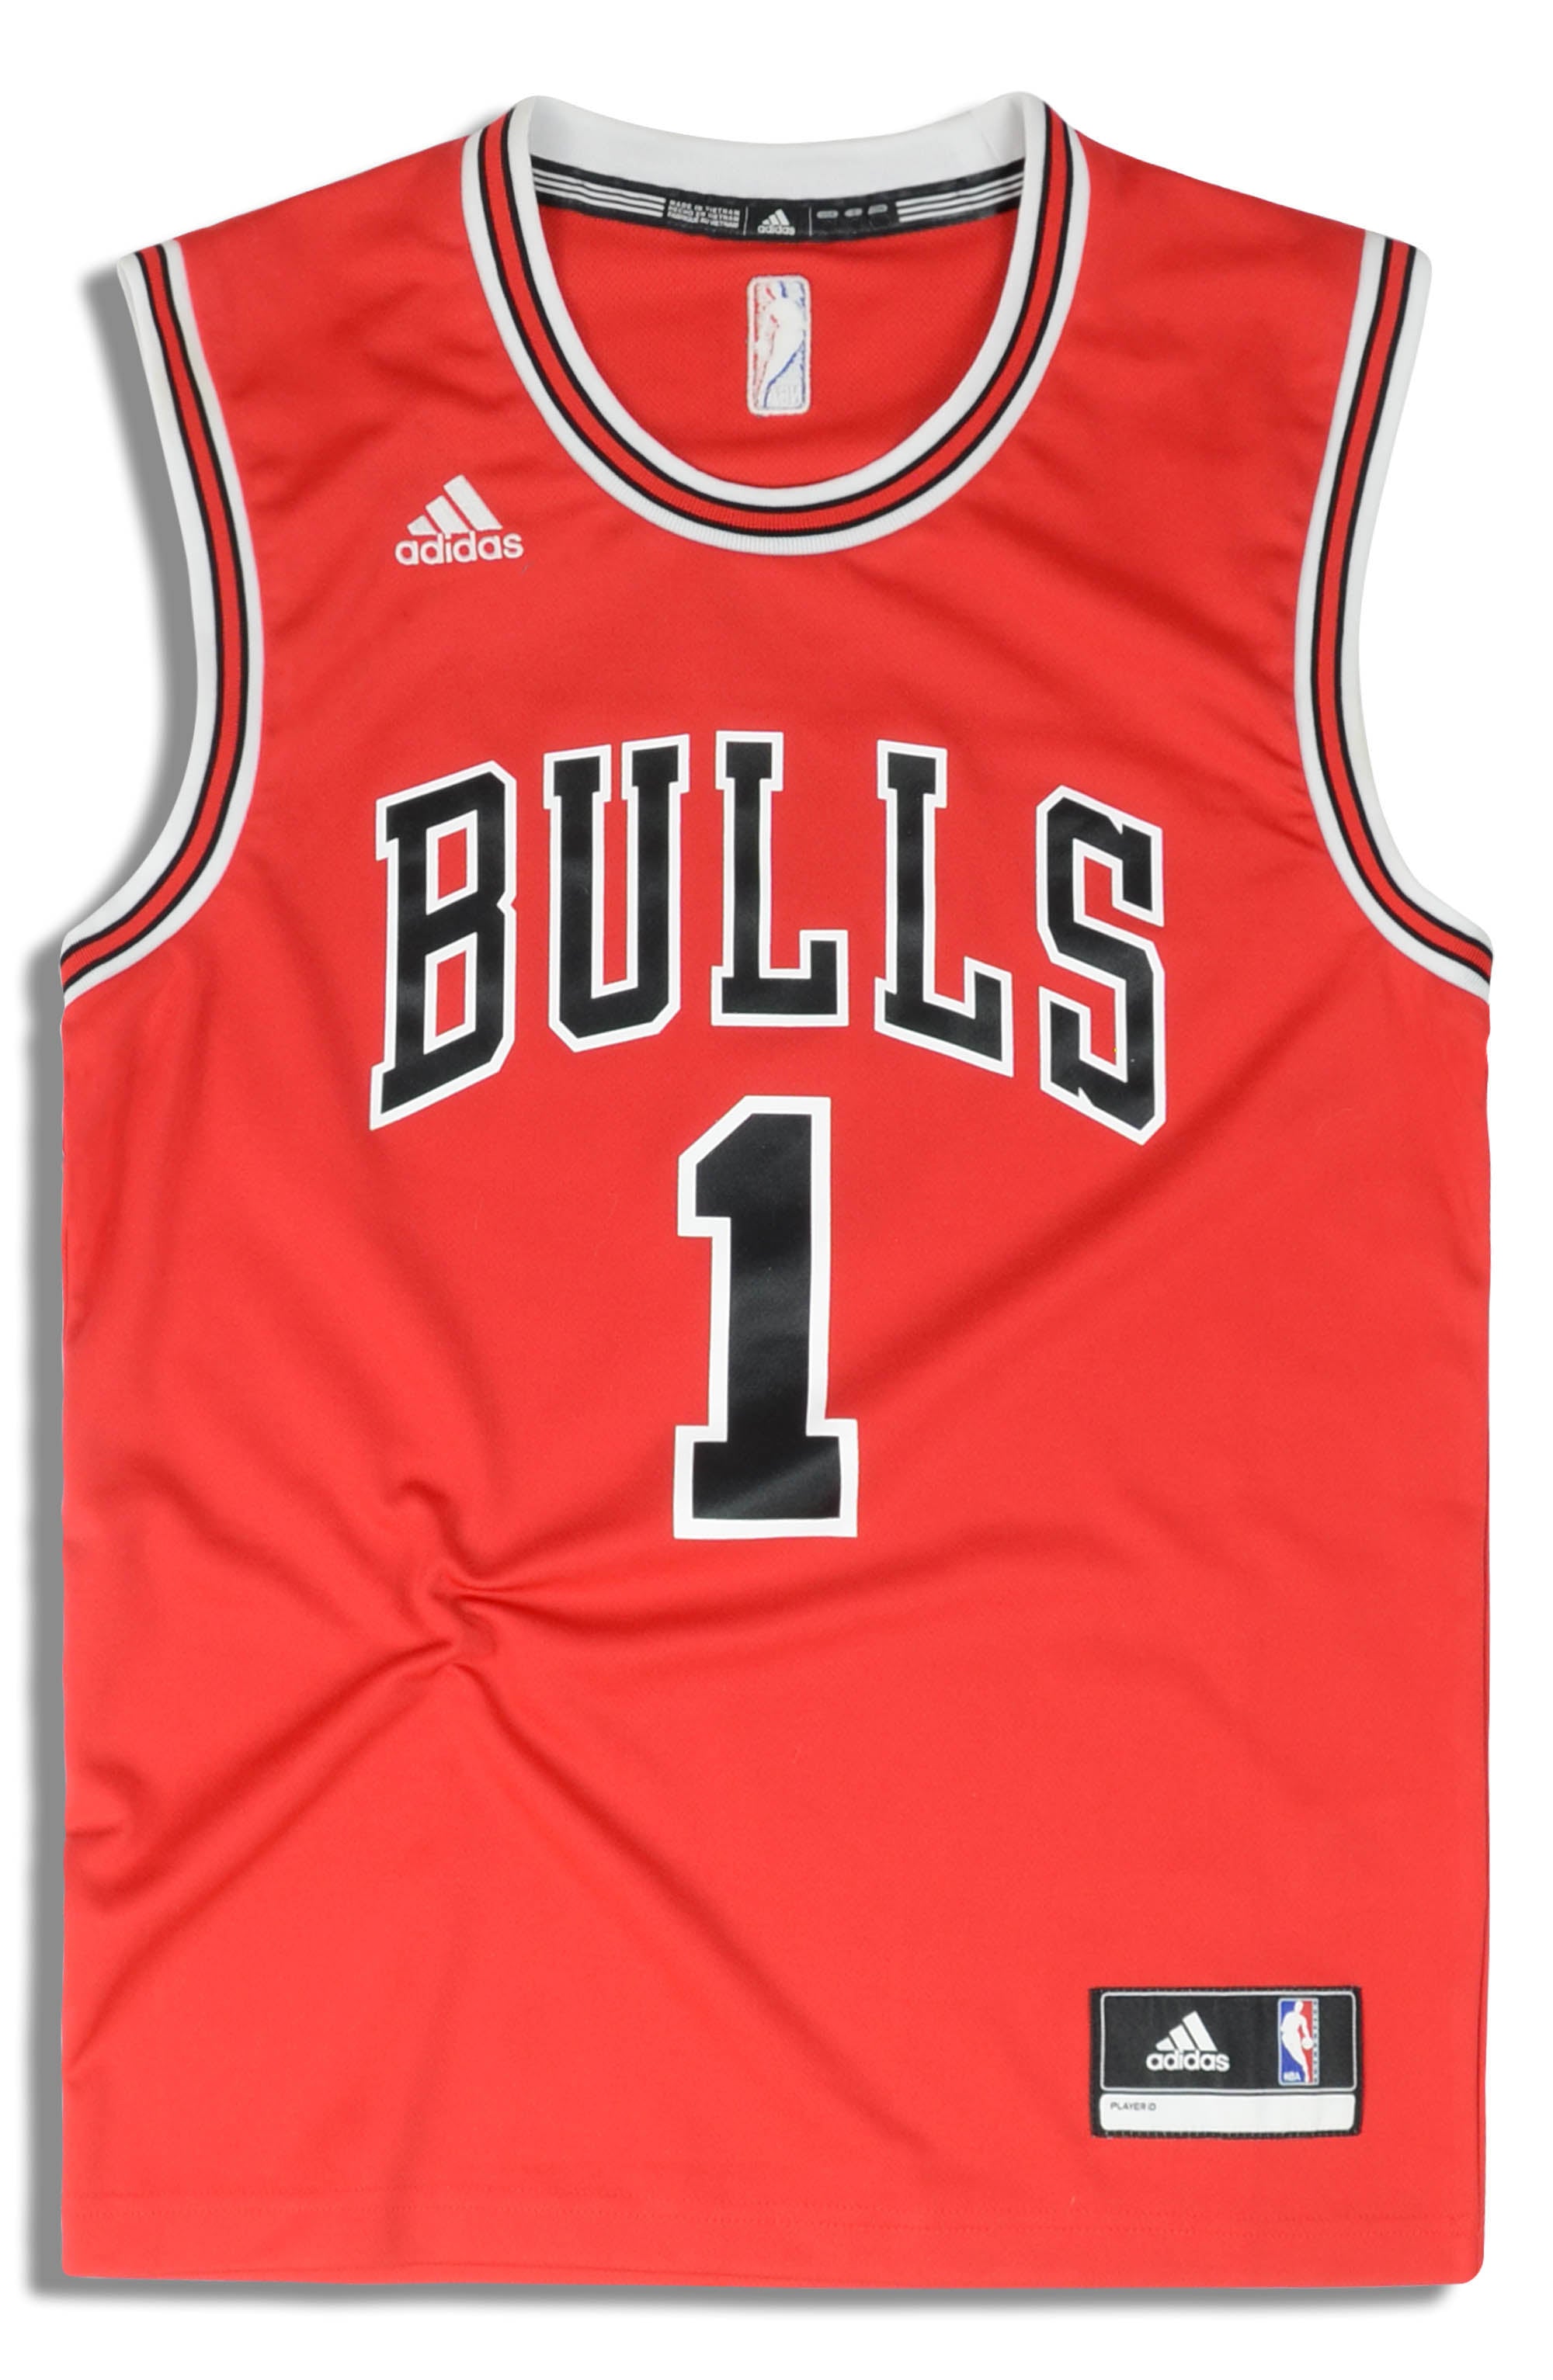 Adidas Chicago Bulls #1 Derrick Rose BOY'S Sewn NBA Swingman Jersey SZ  L(14-16)